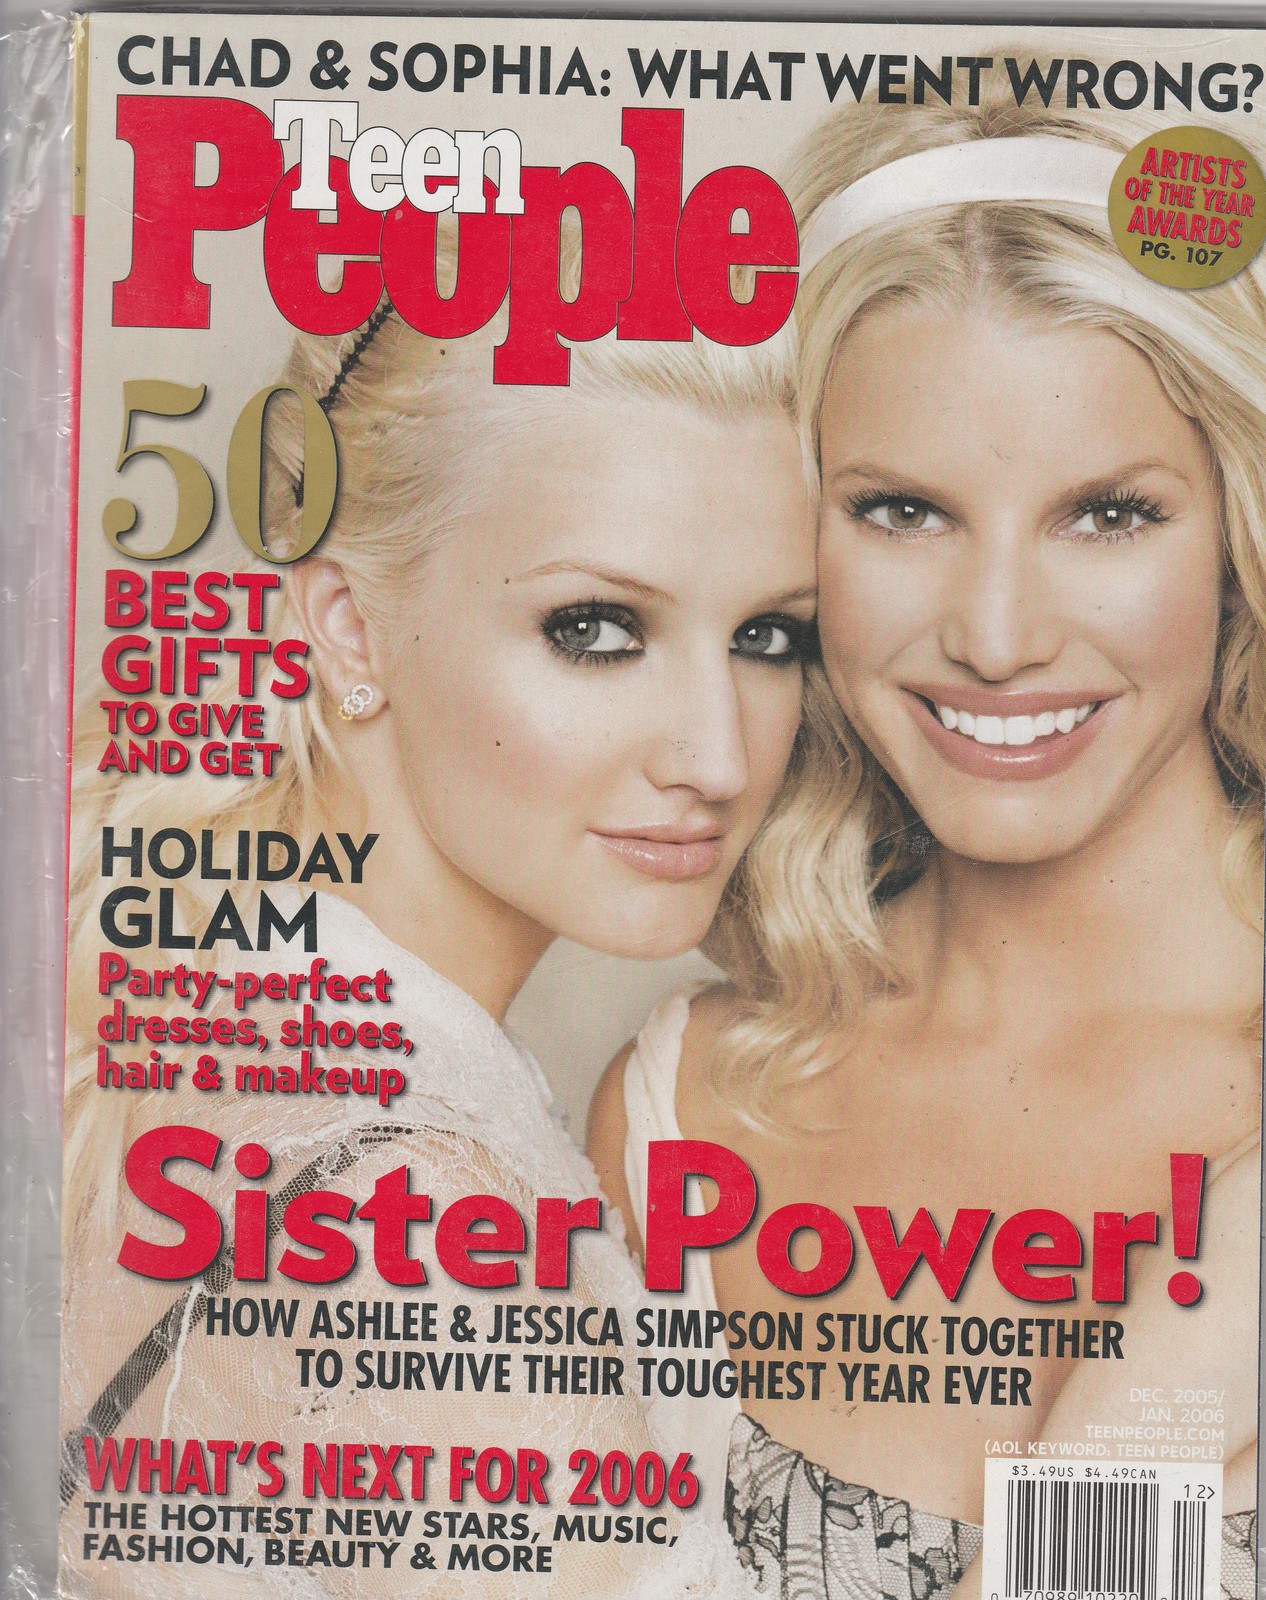 Primary image for Teen People magazine December 2005/January 2006 Ashlee & Jessica Simpson